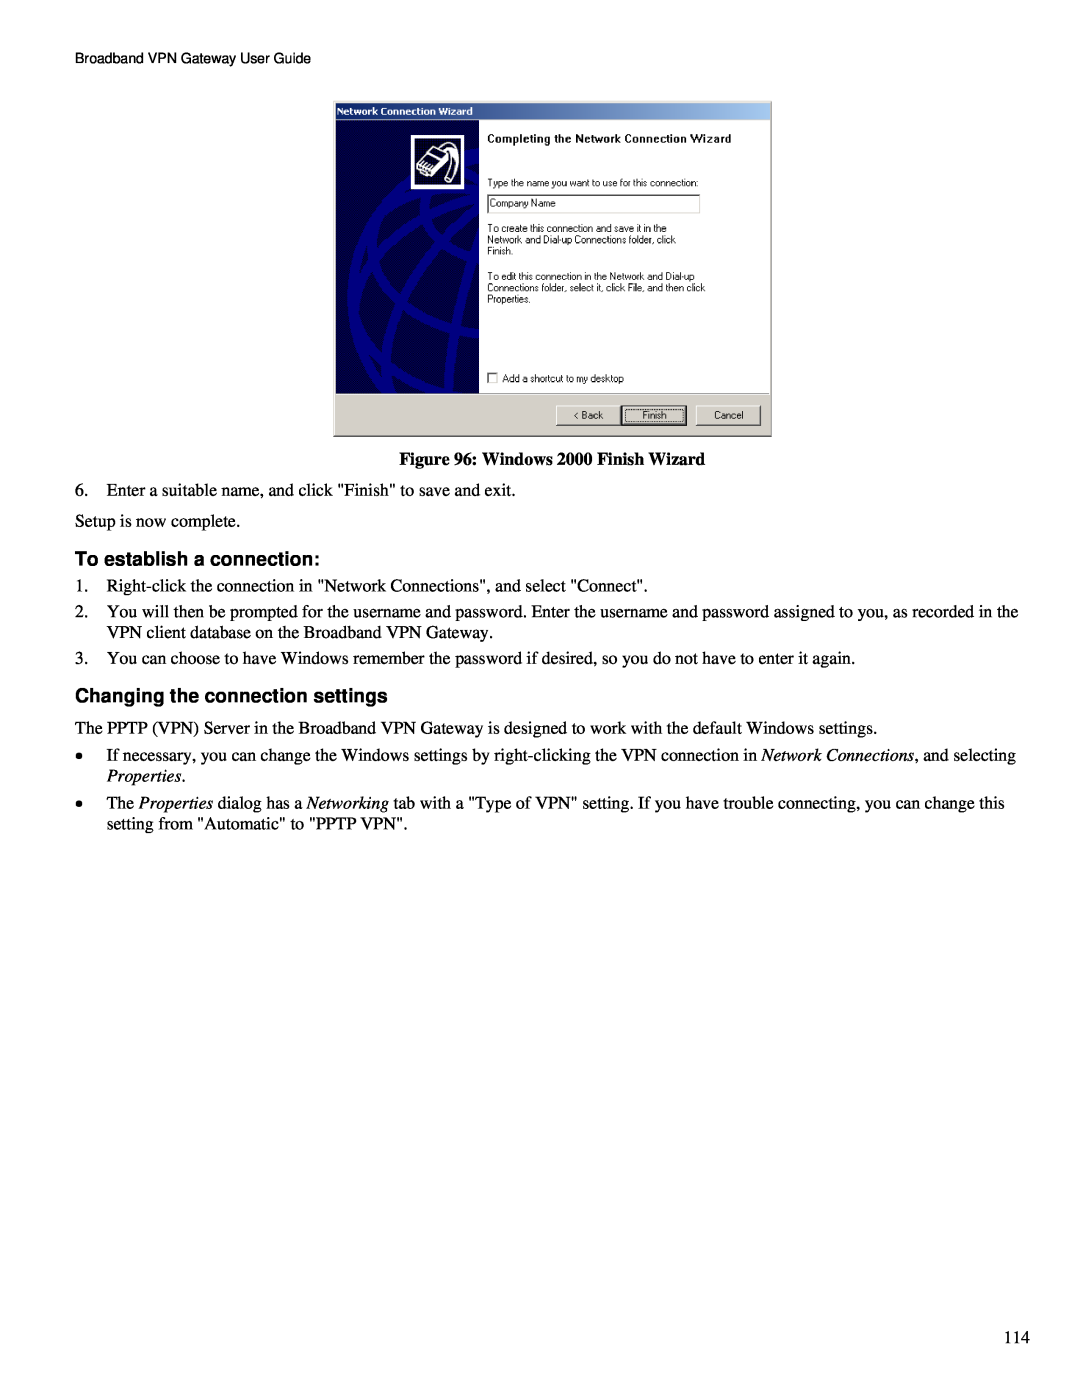 TRENDnet TW100-BRV324 manual Windows 2000 Finish Wizard 